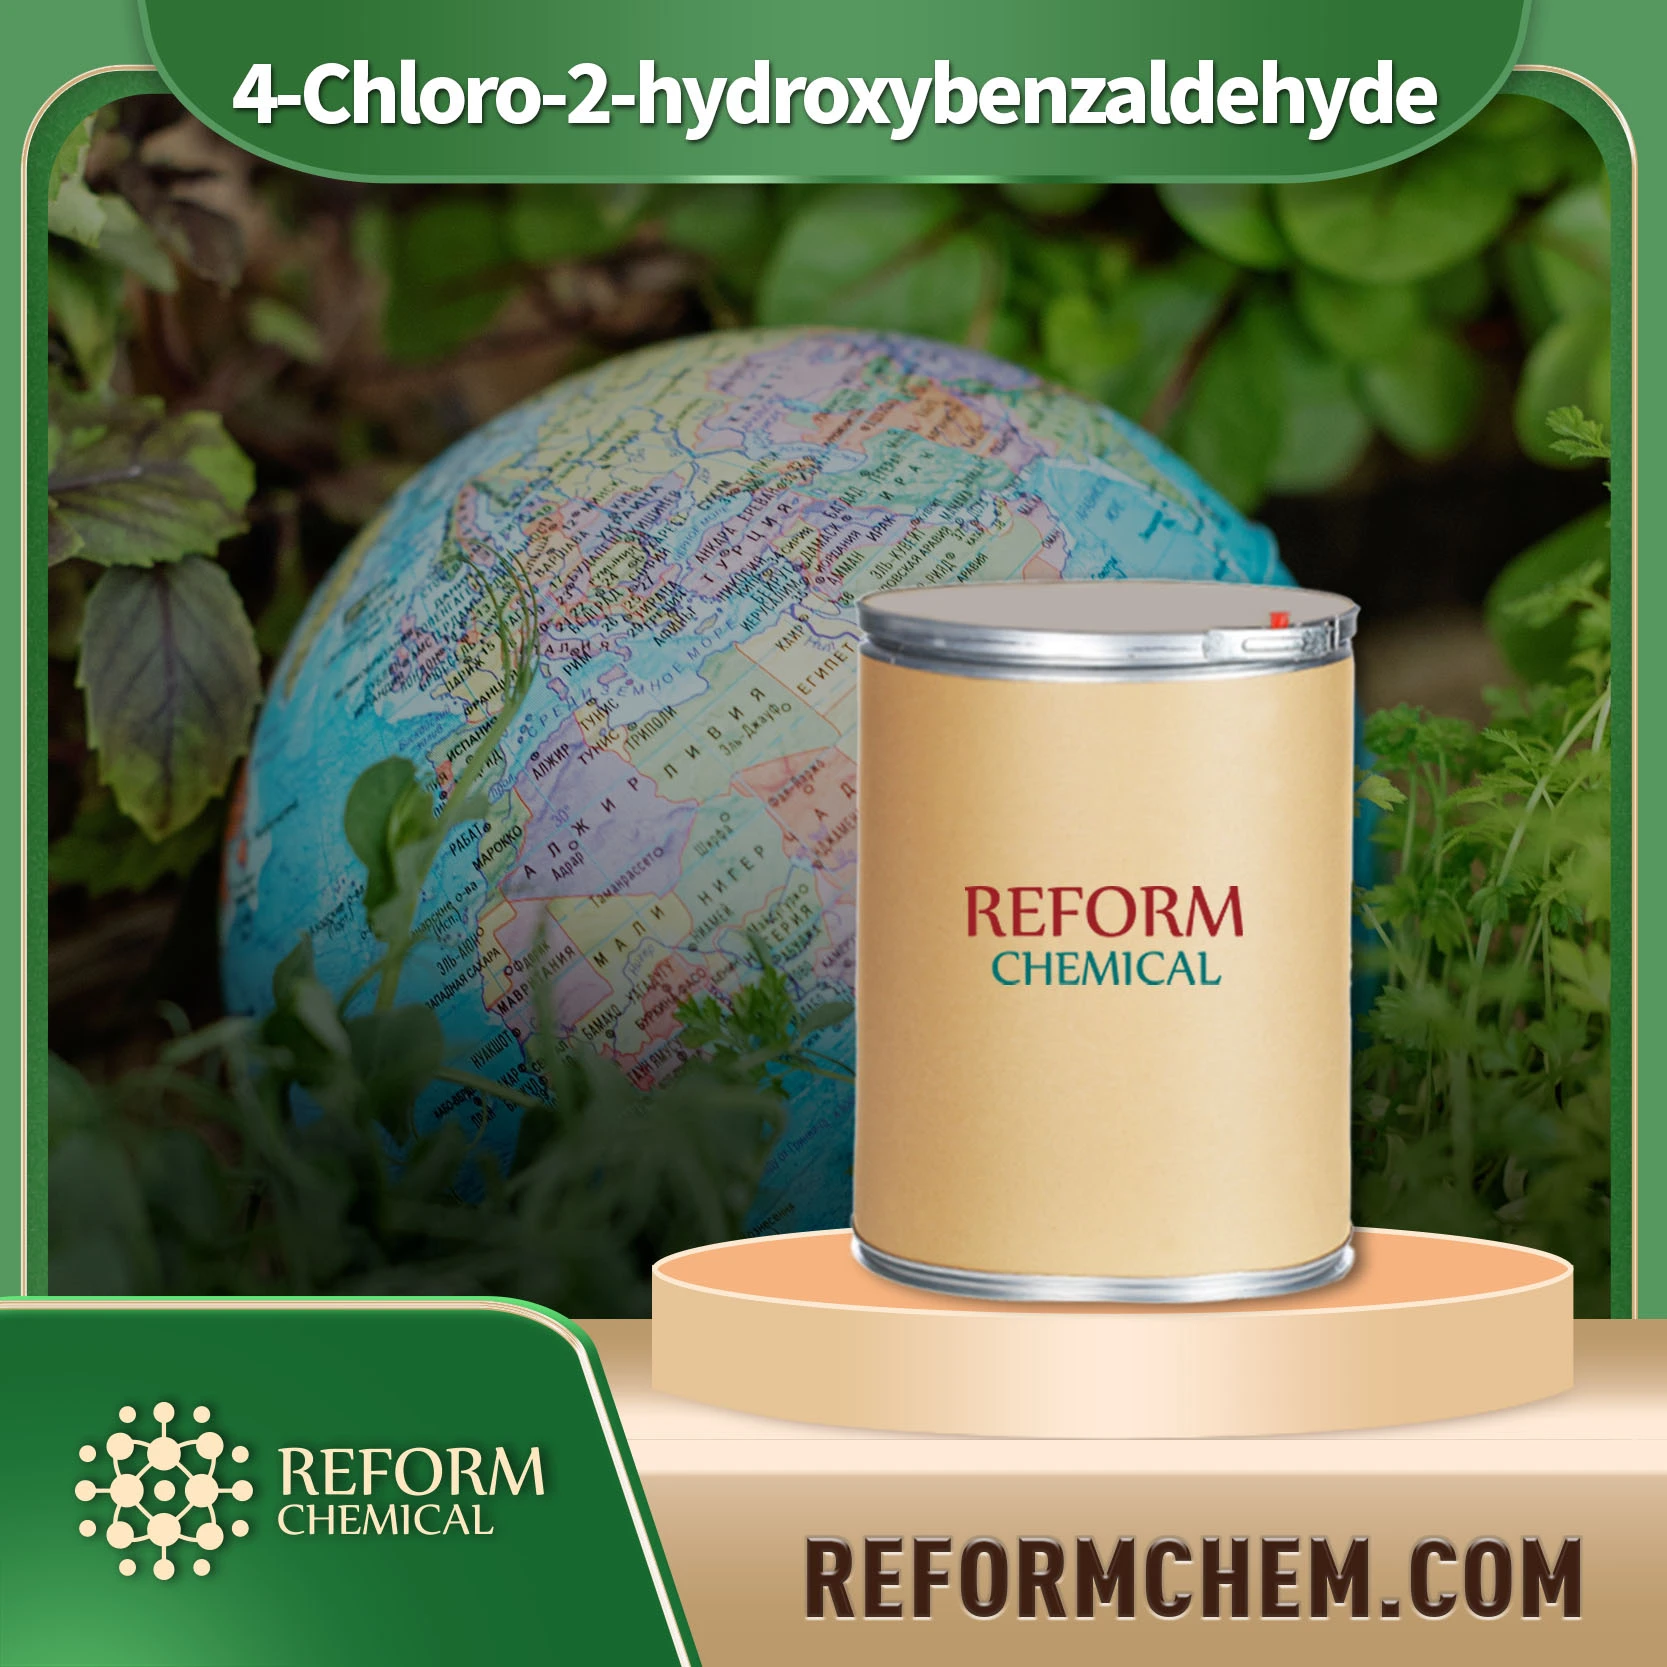 4-Chloro-2-hydroxybenzaldehyde